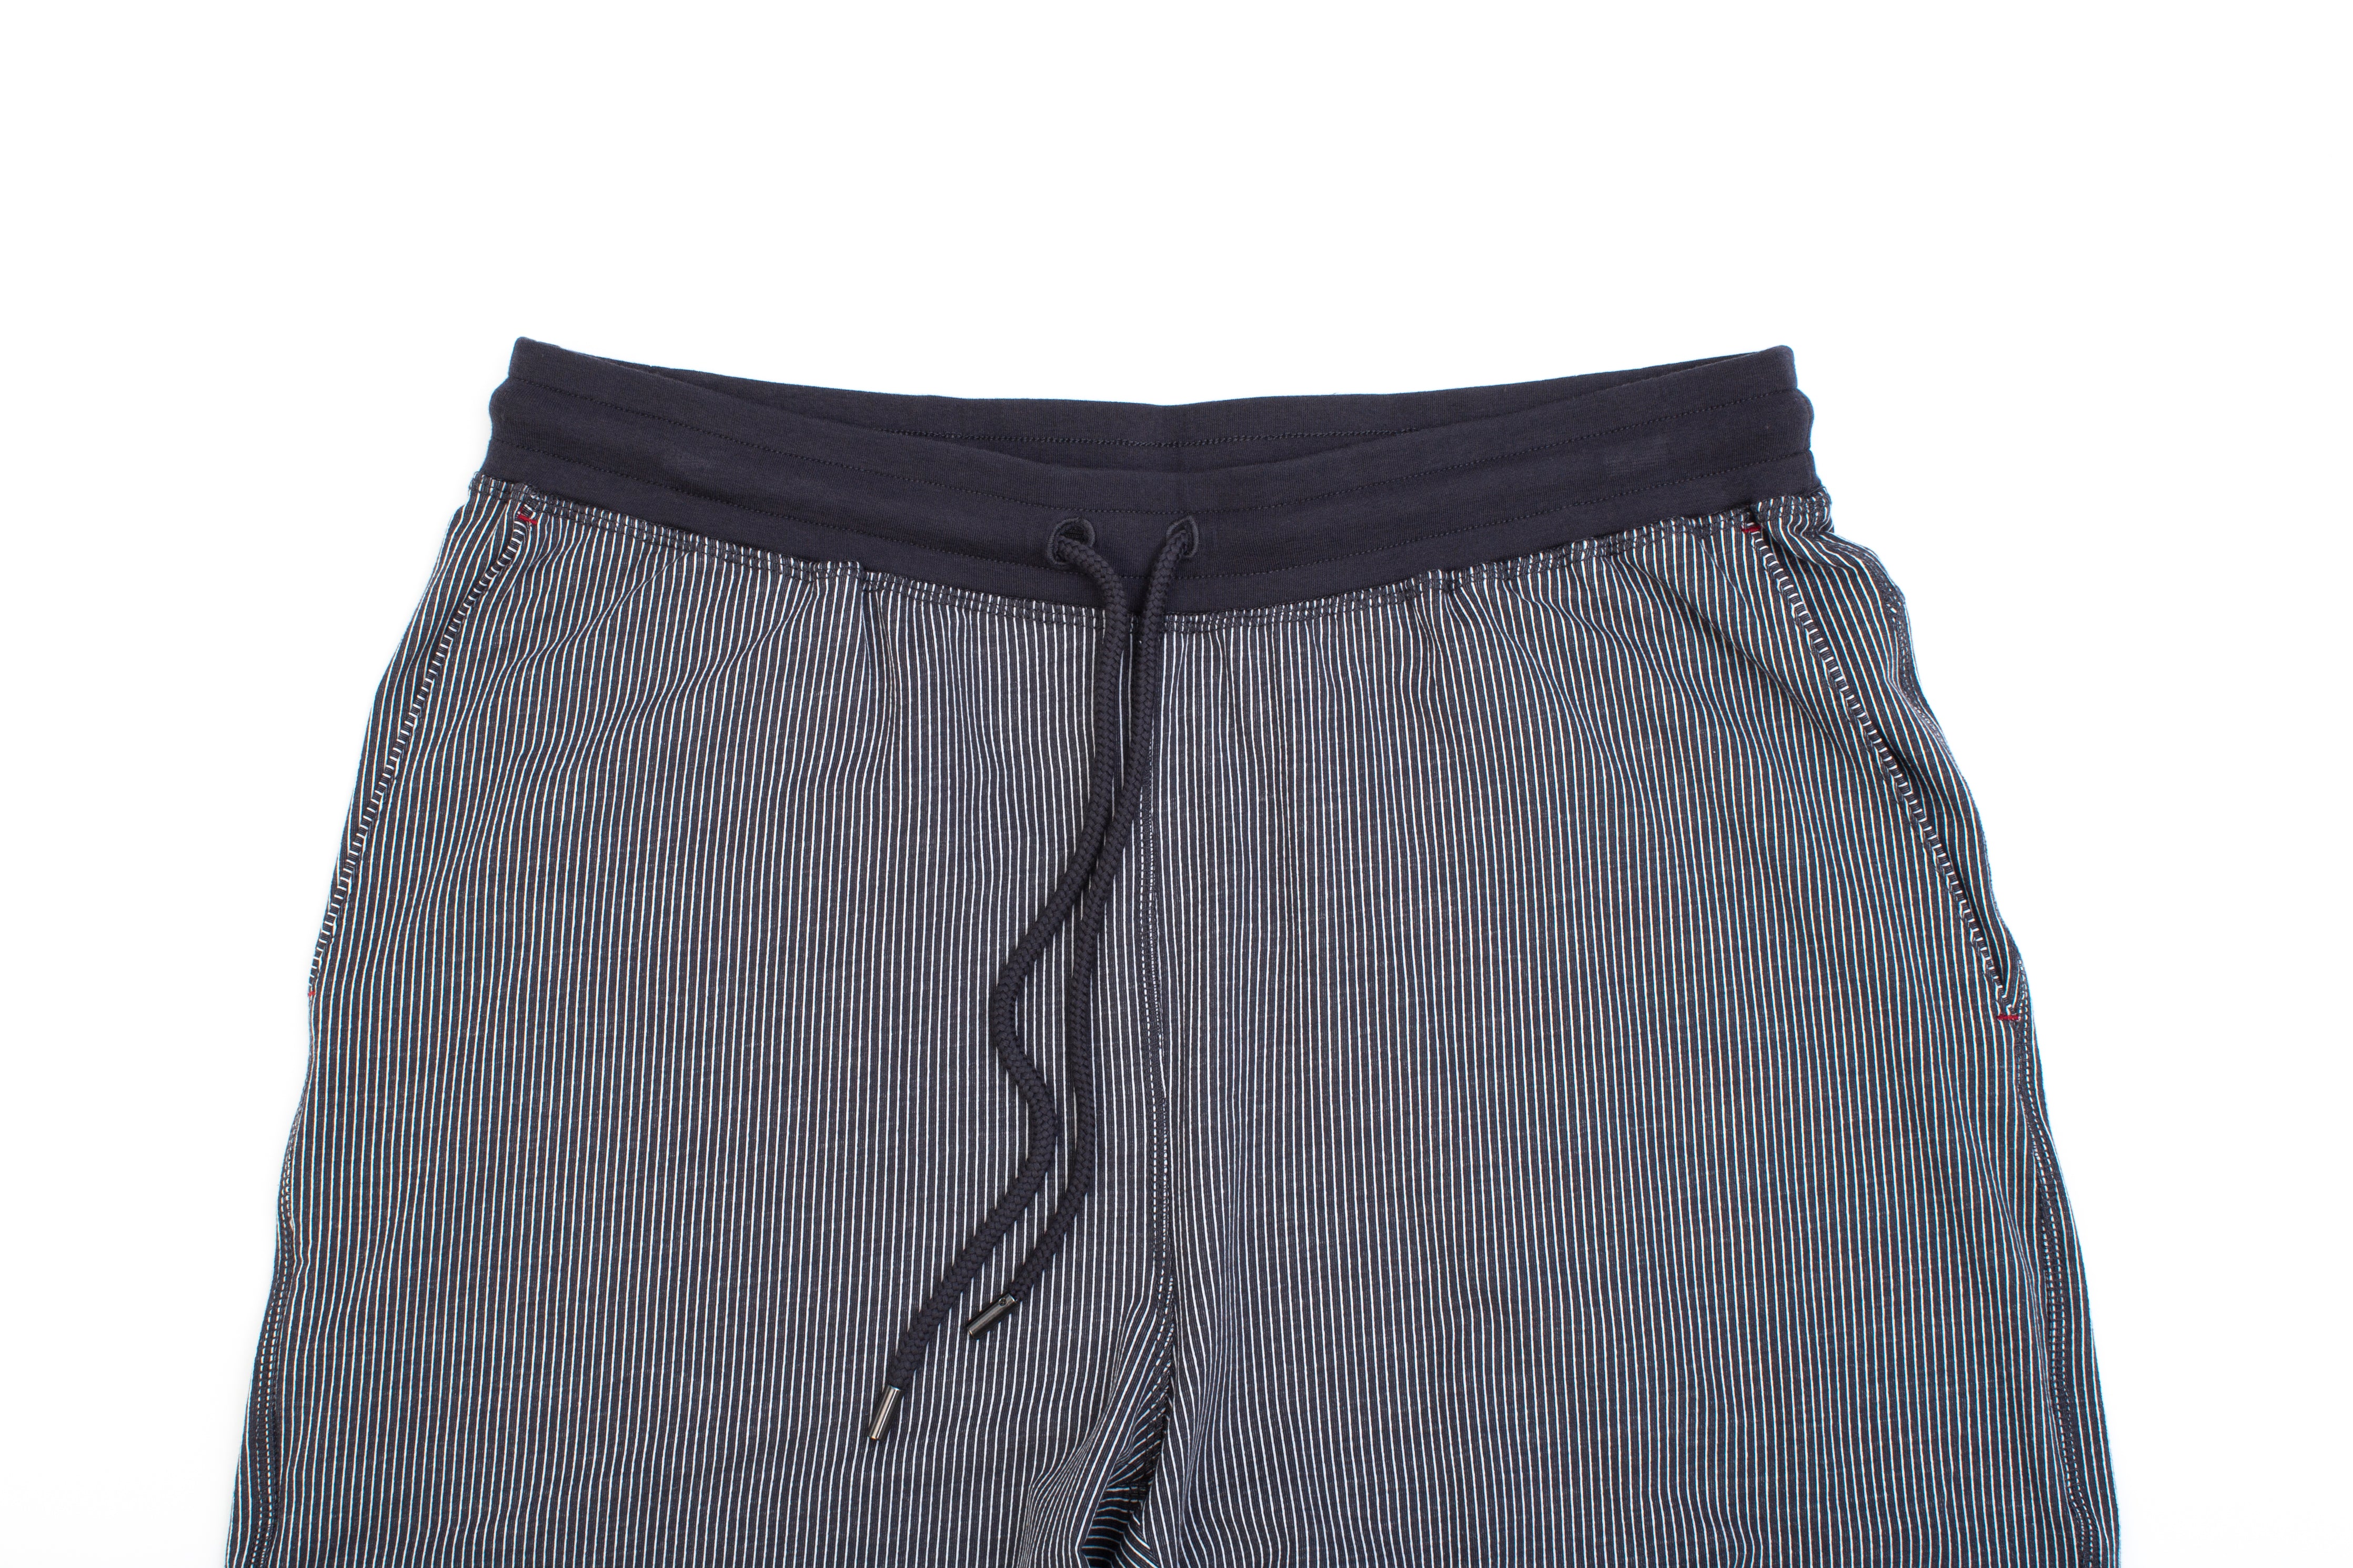 Striped Cotton/Modal/Spandex Cuffed Pant